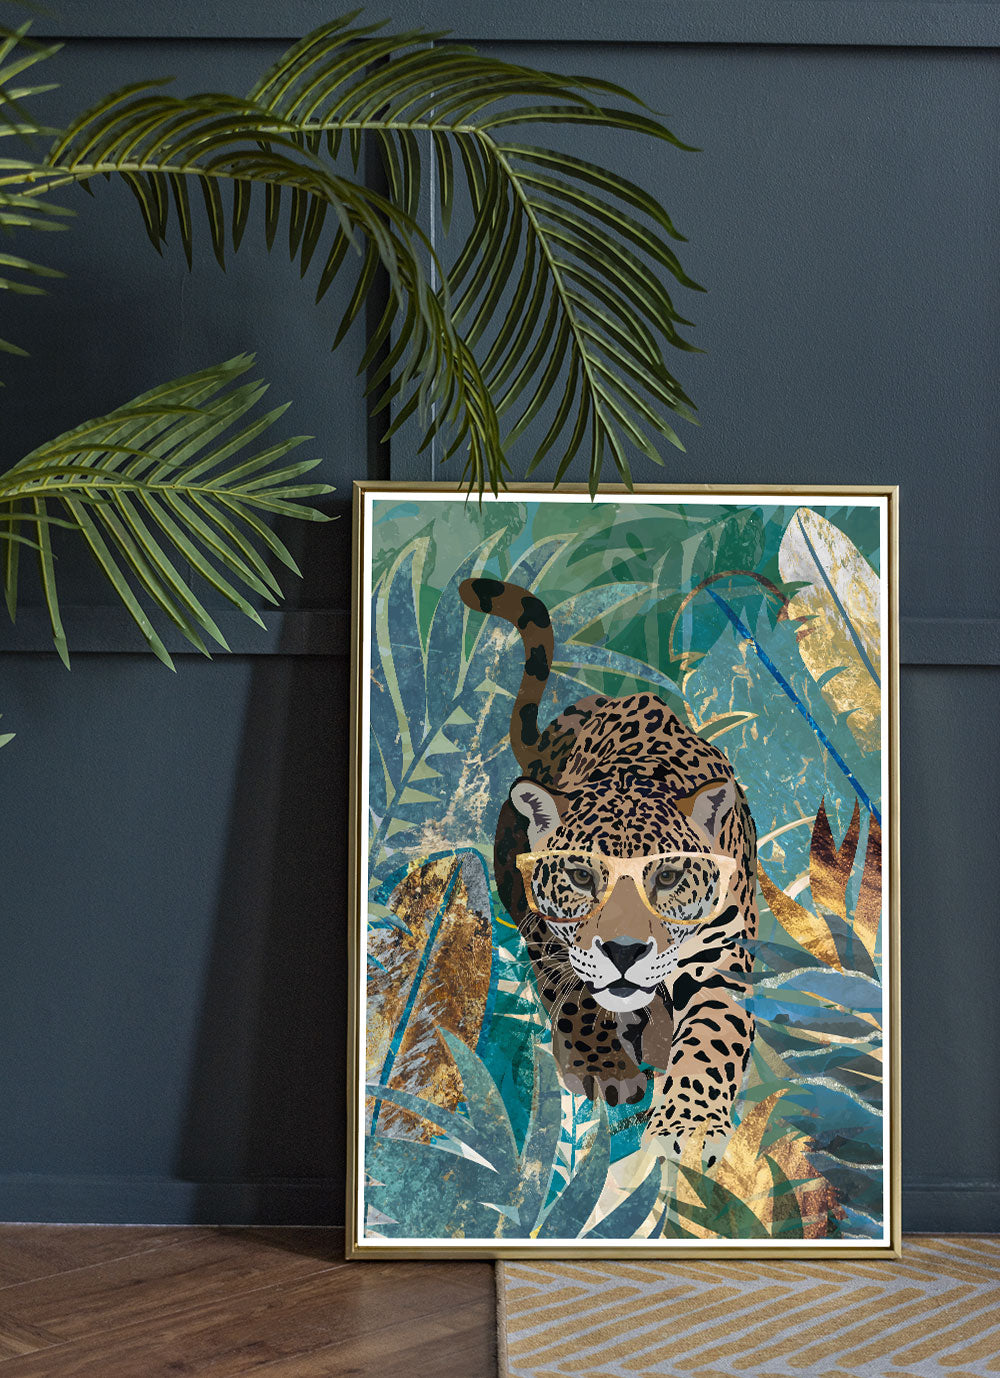 Leopard Art Print by Sarah Manovski in a moody room